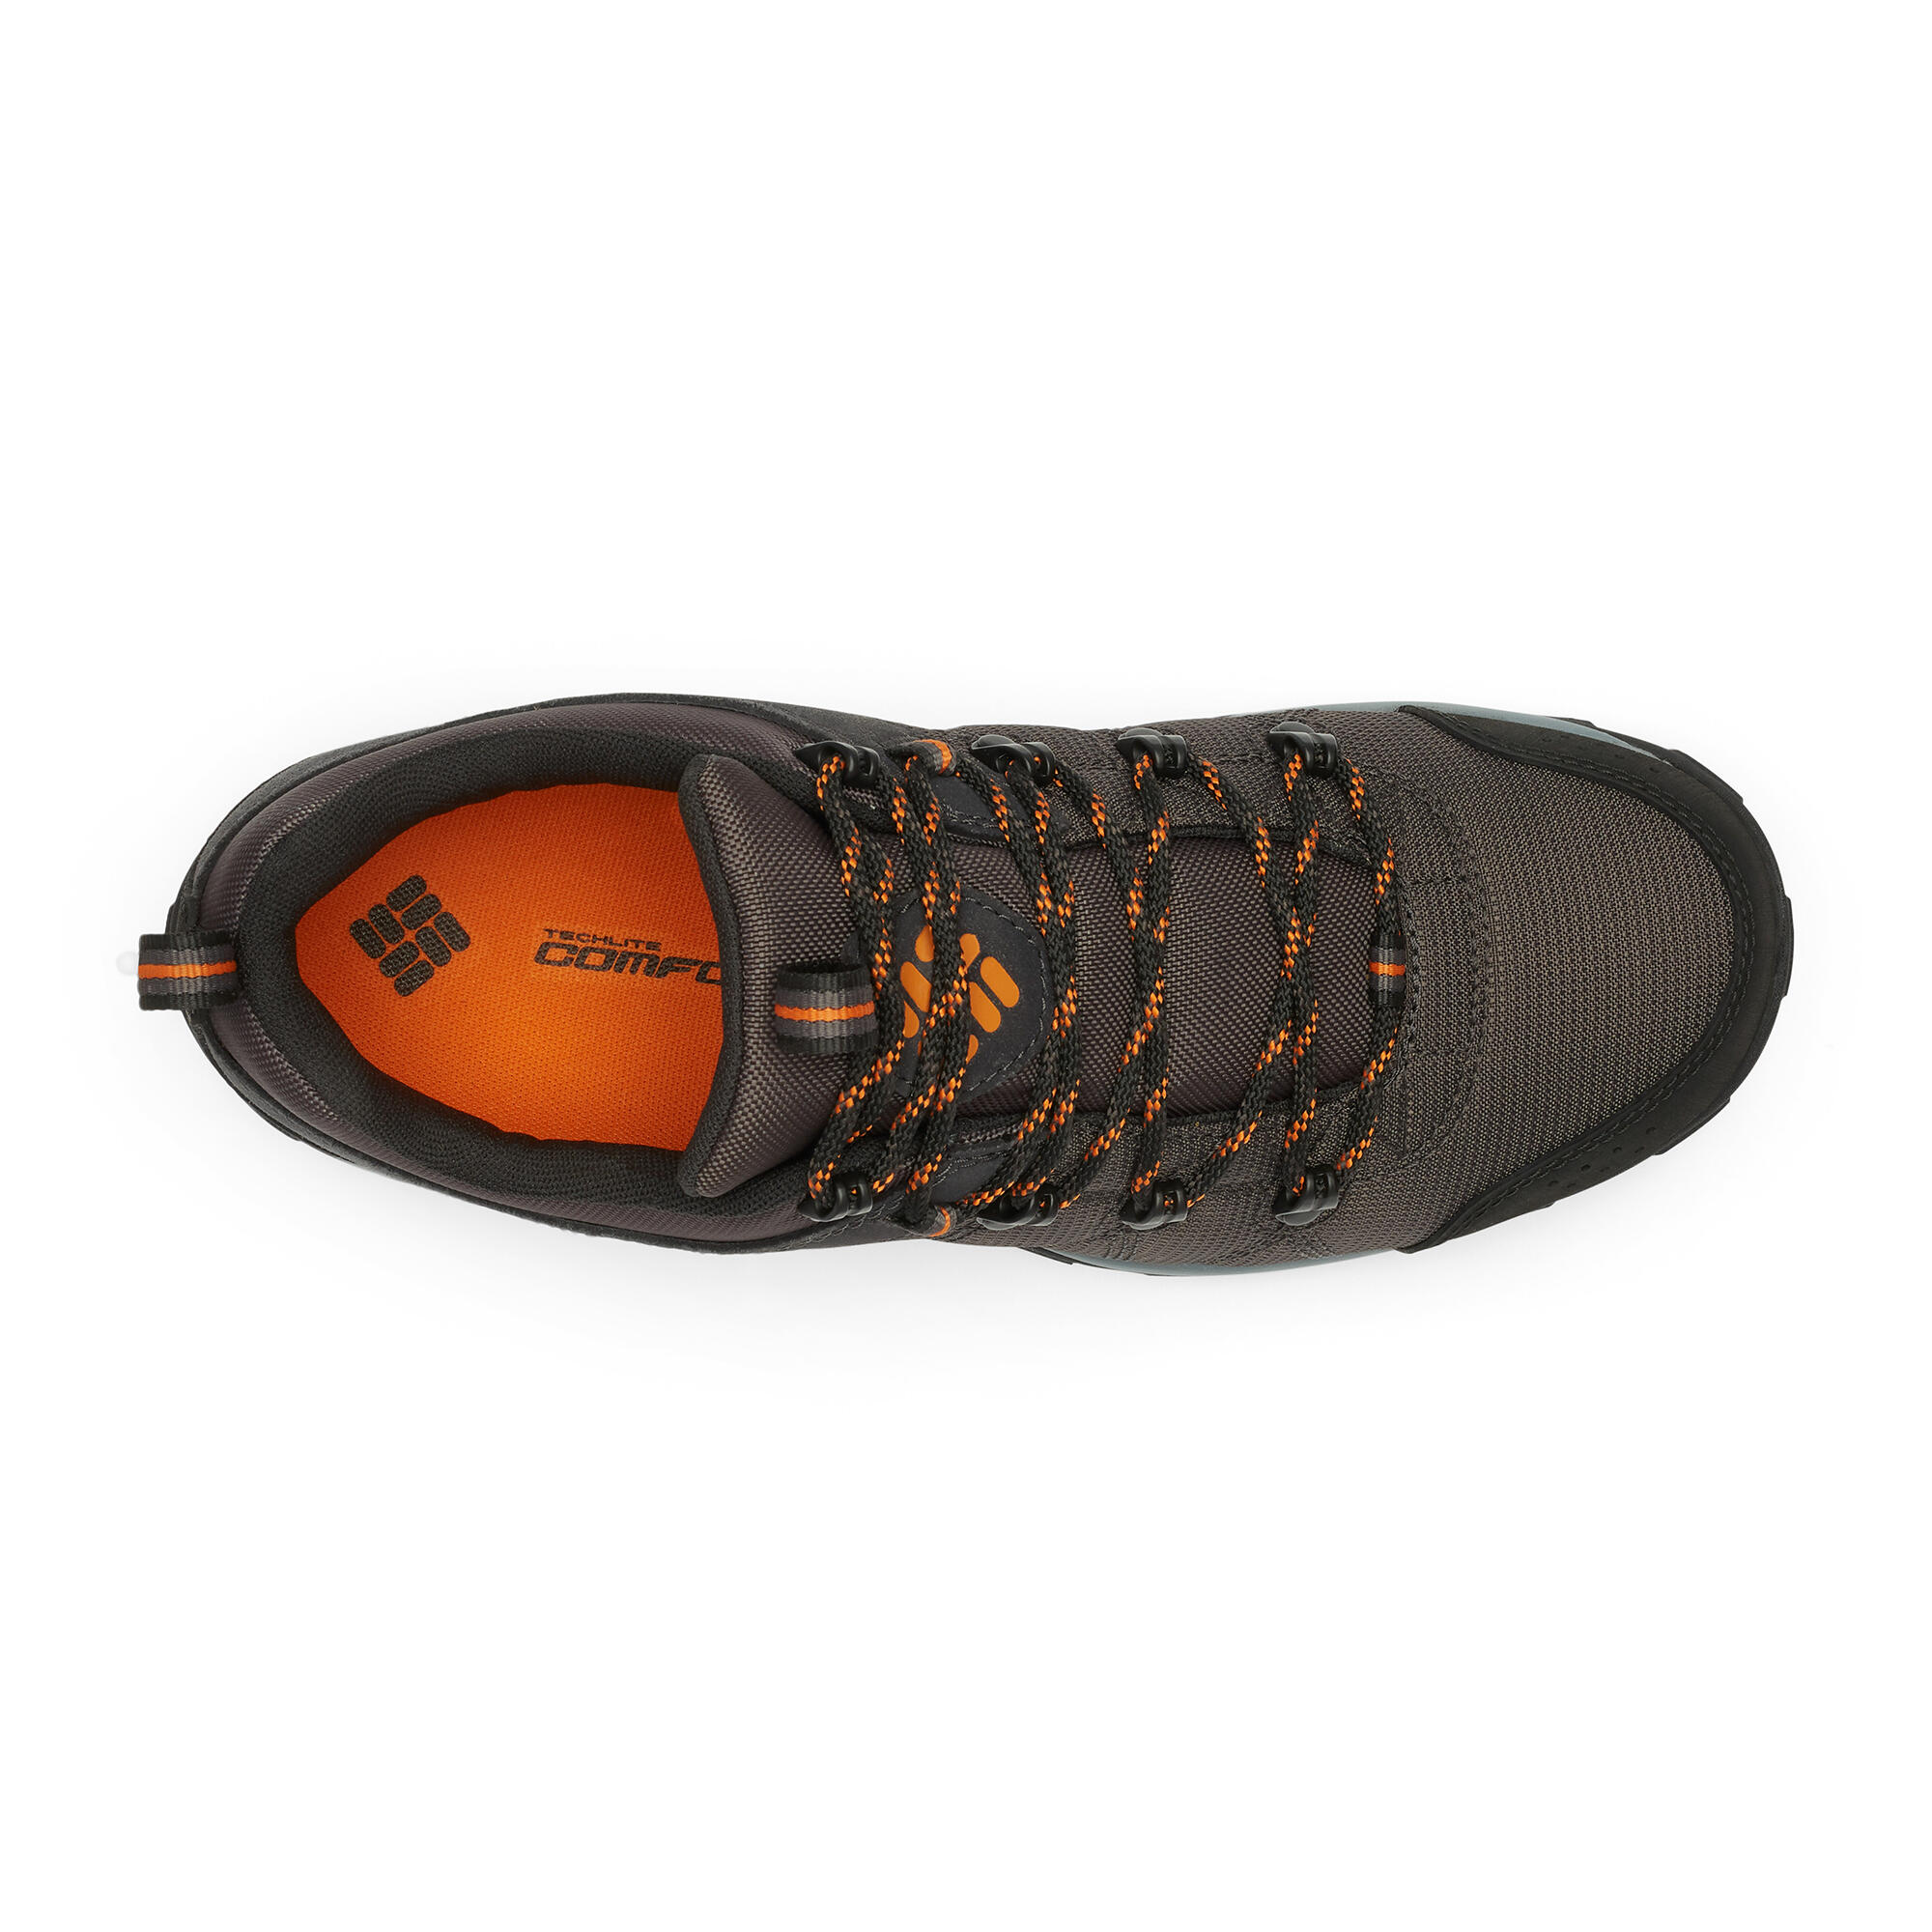 Men’s hiking shoes - Peakfreak Venture Columbia lowtop 7/9